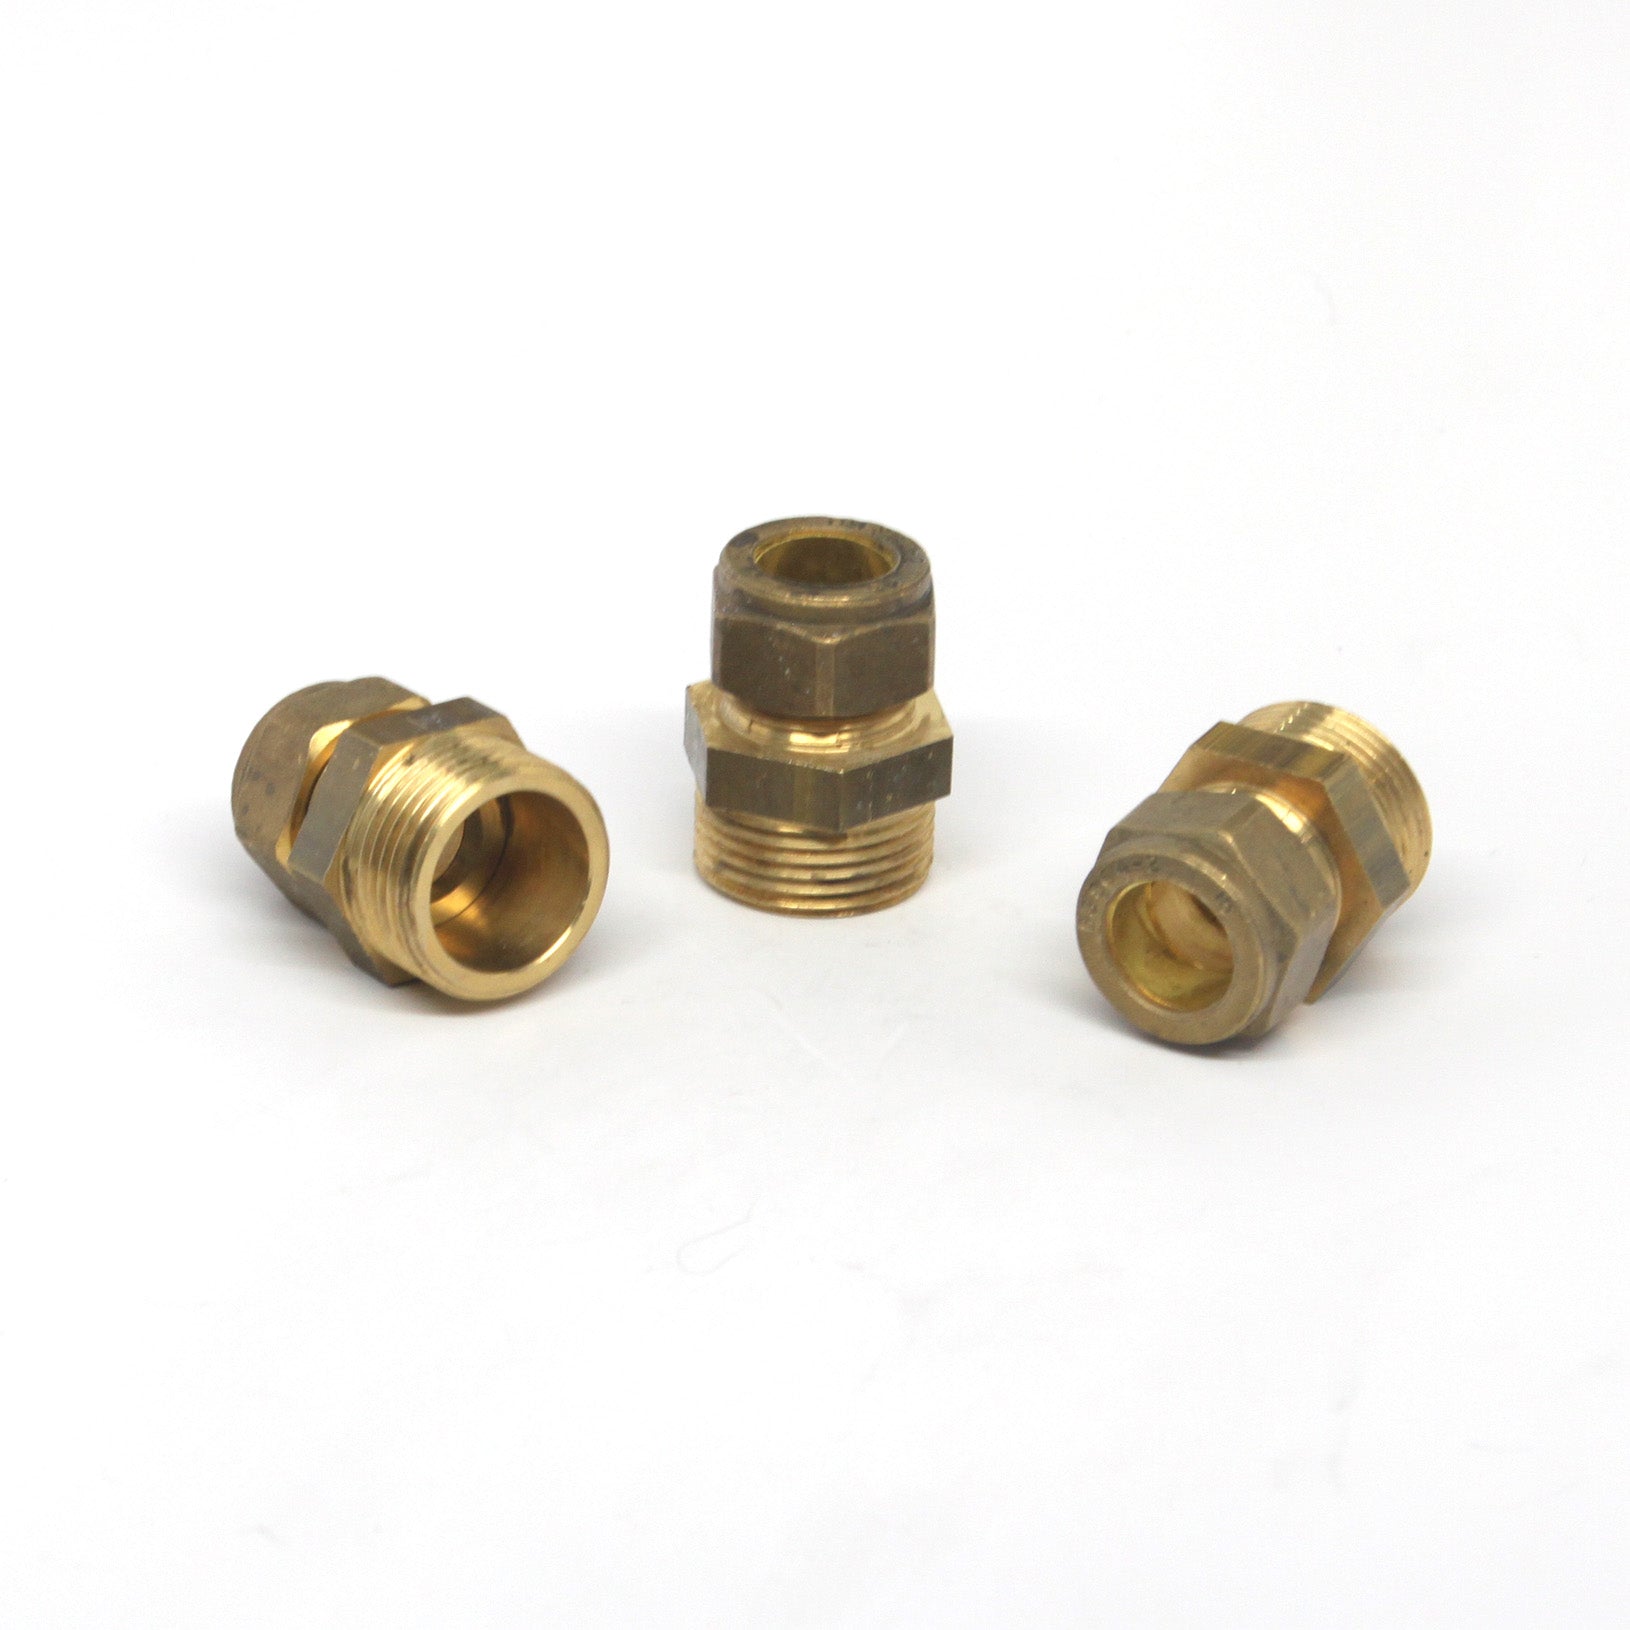 P2891 - Brass 3/4" x 15mm Male Adaptor for 32TEMP Supply Set for Intersan/AquaDesign Wash Fountain